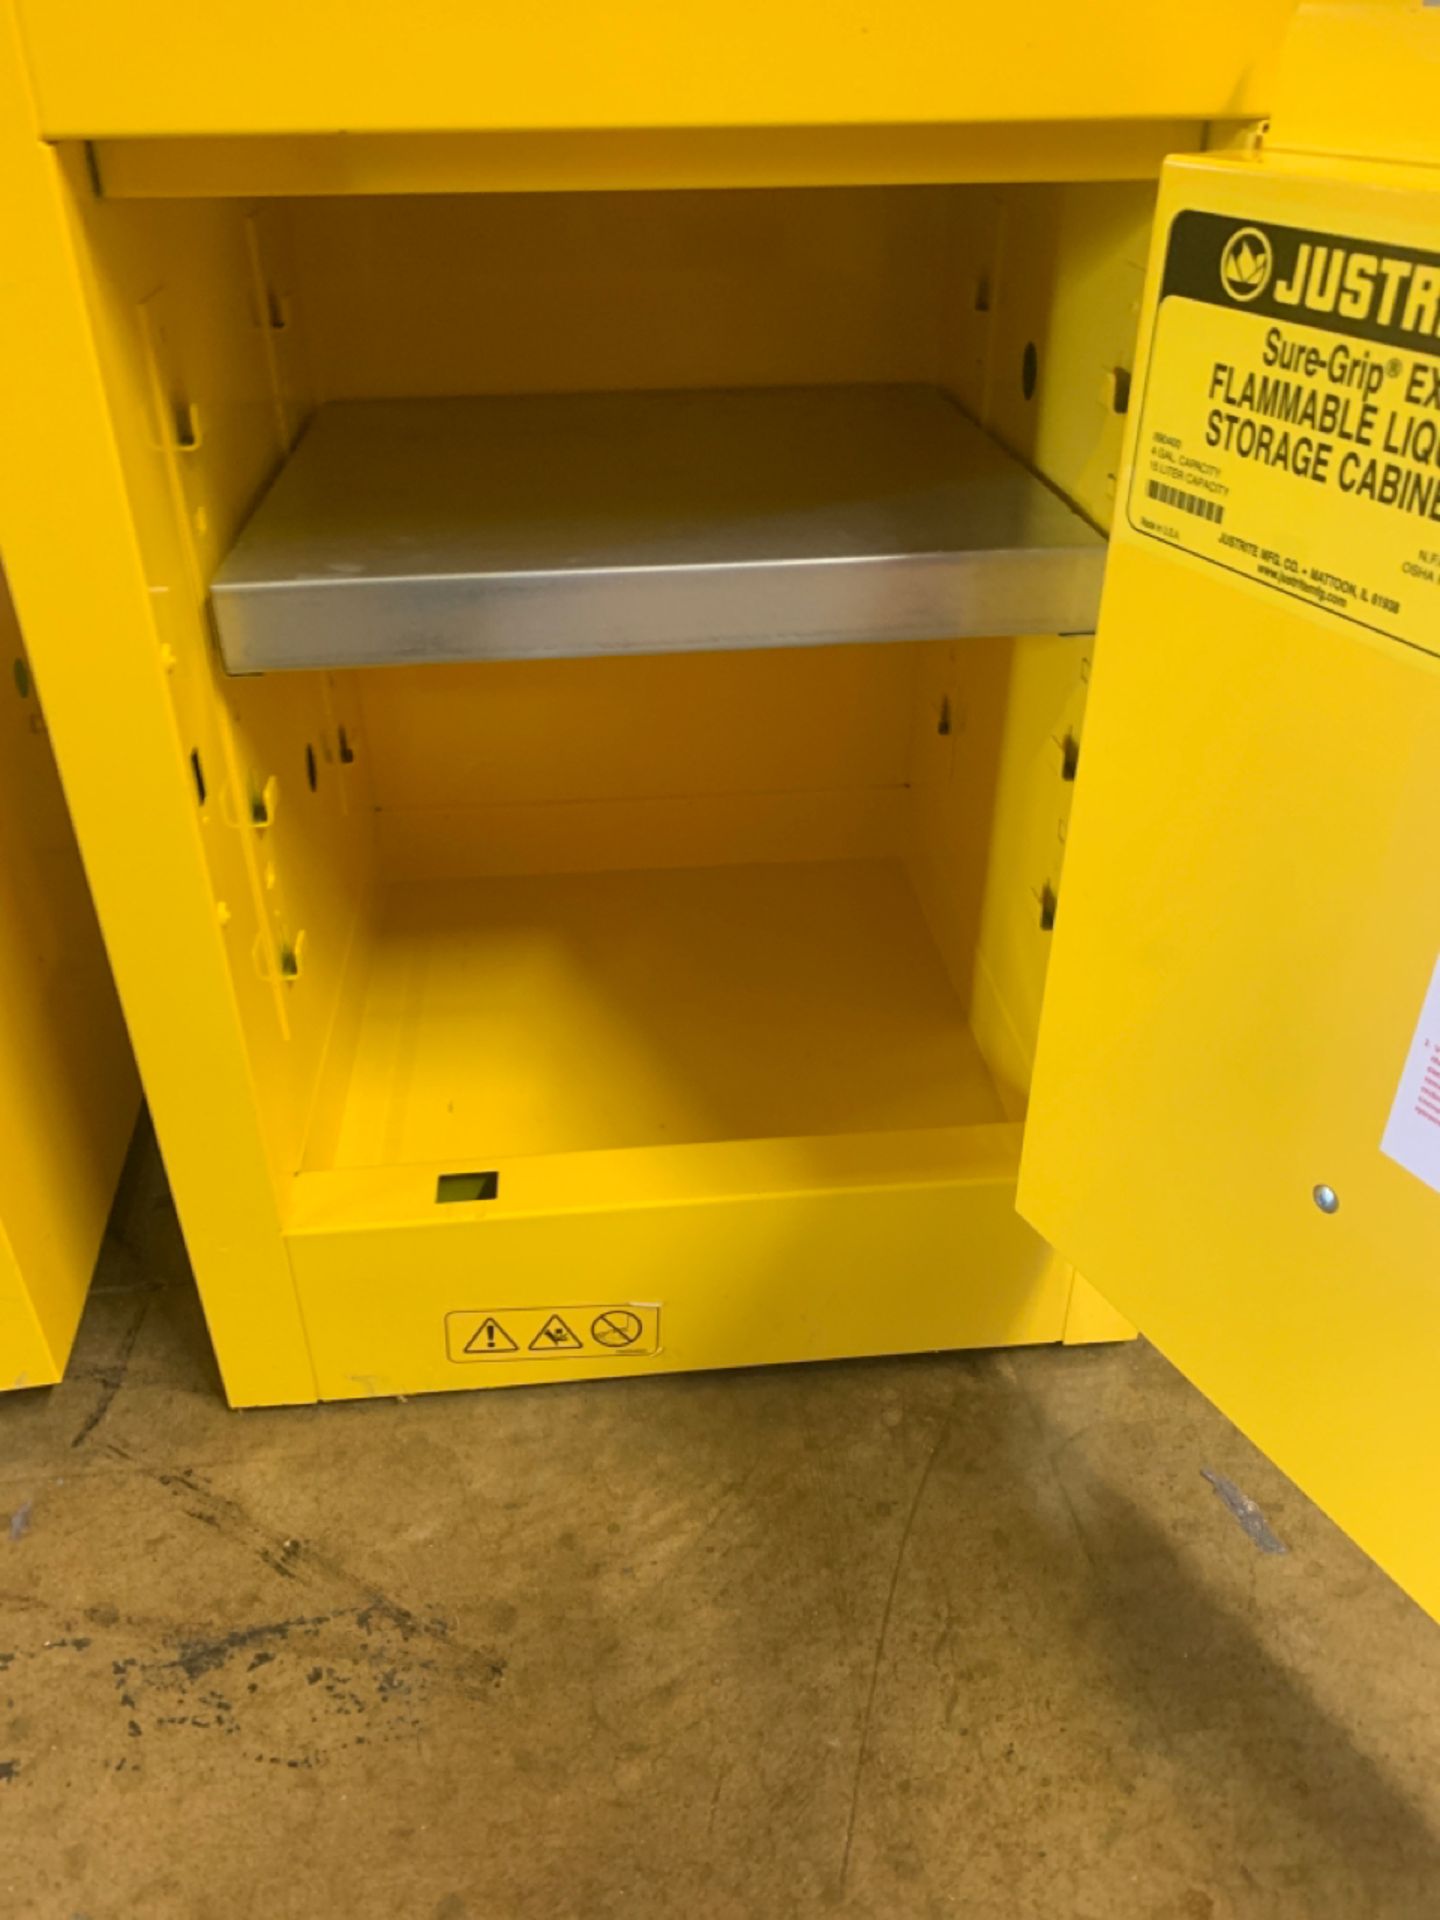 JustRite Flammable Liquid Storage Cabinet - Image 3 of 3